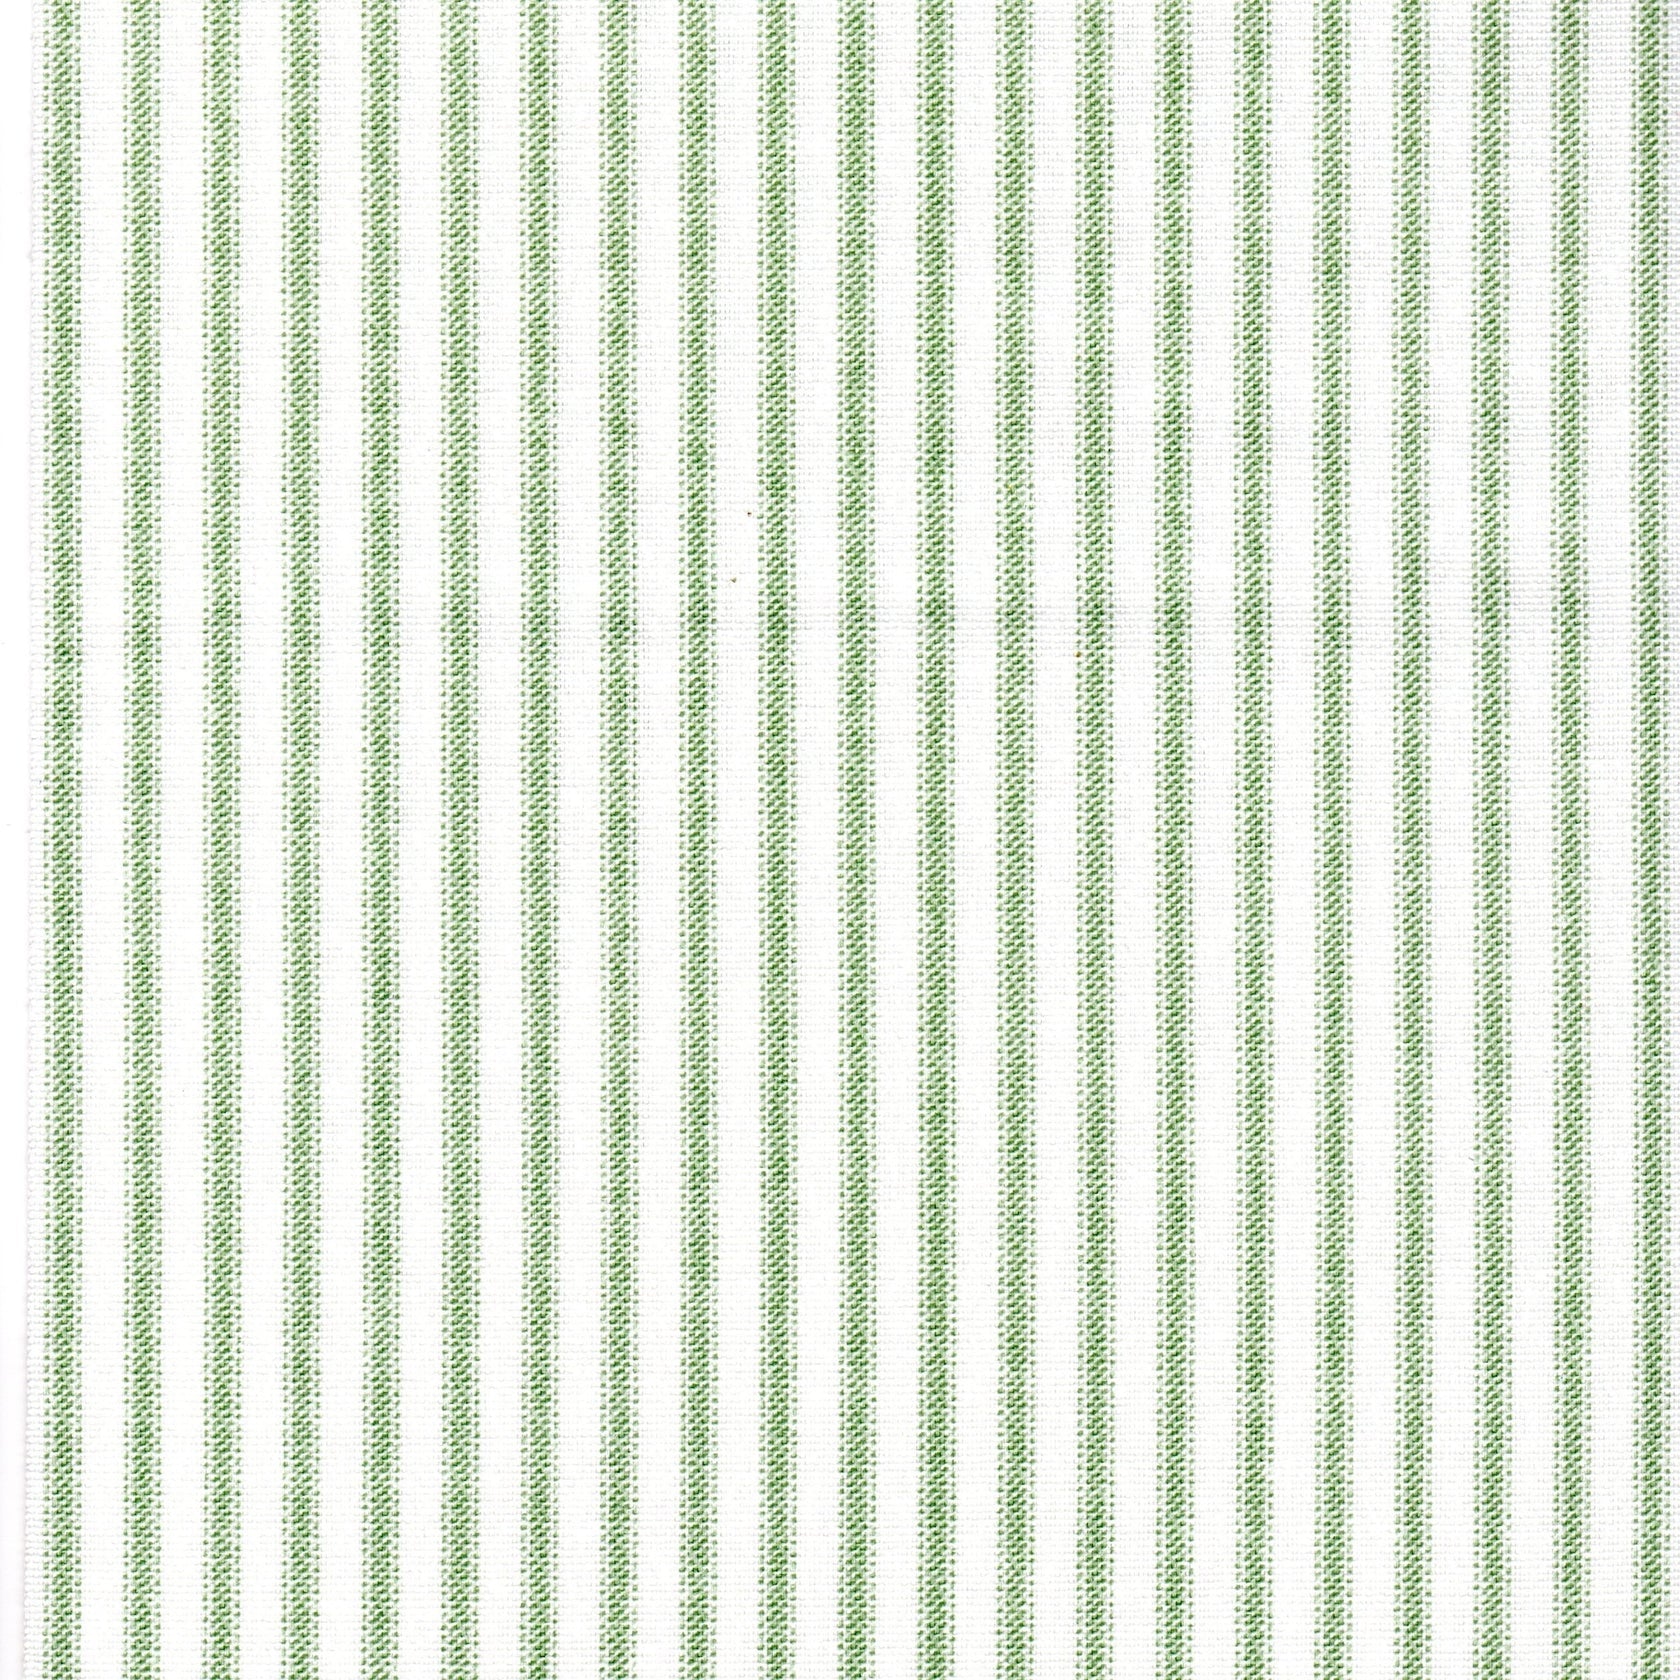 tailored crib skirt in Classic Sage Green Ticking Stripe on White